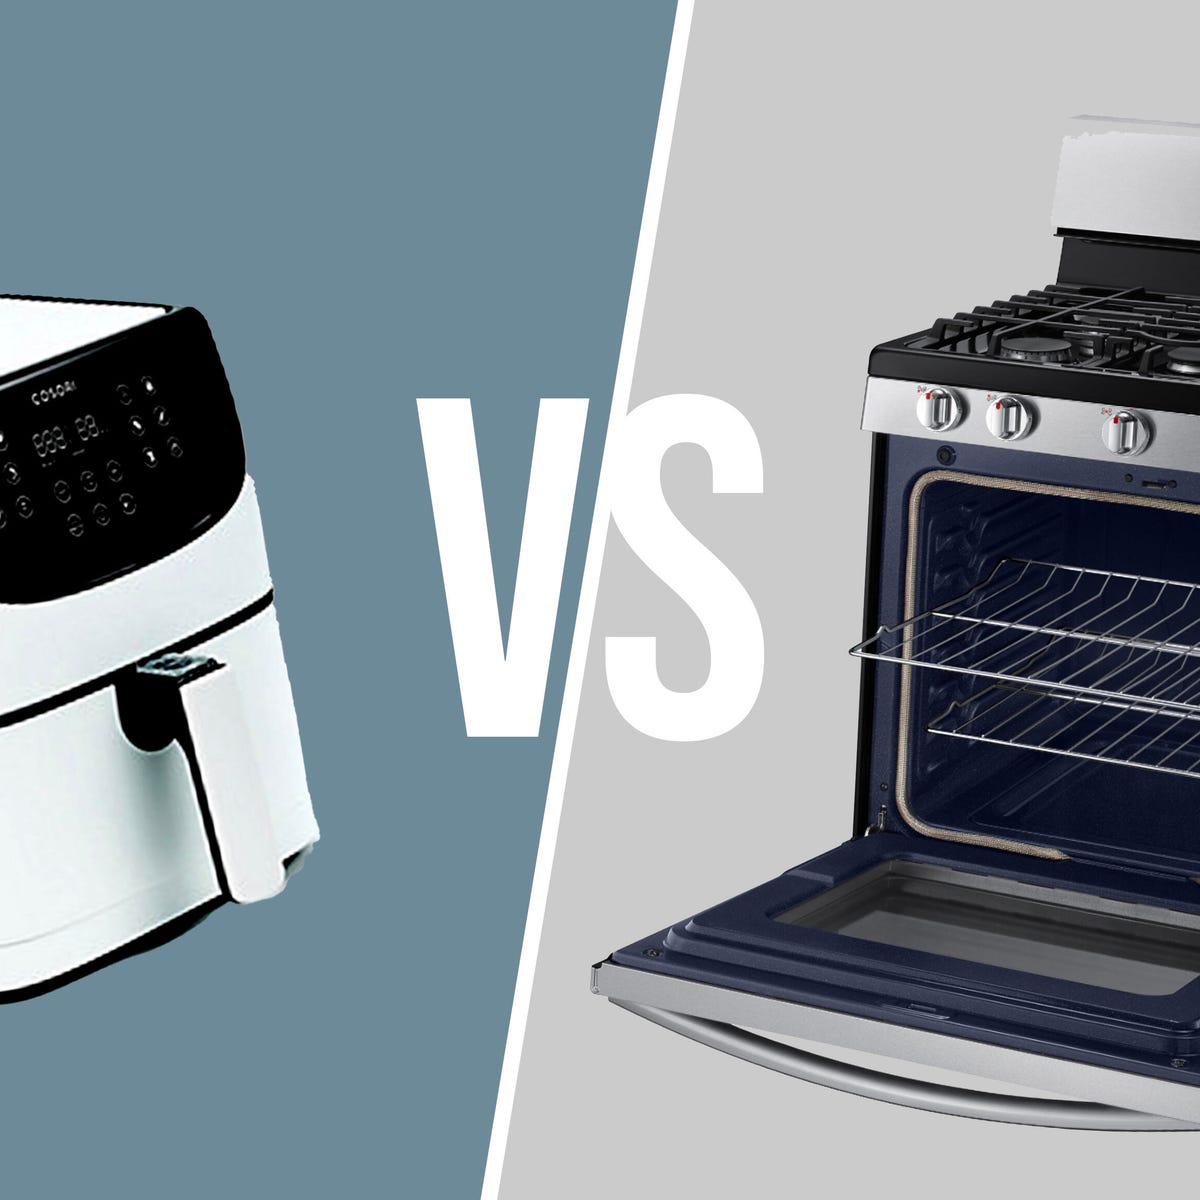 Revolutionary Kitchen Gadget: Air Fryer vs Microwave Comparison